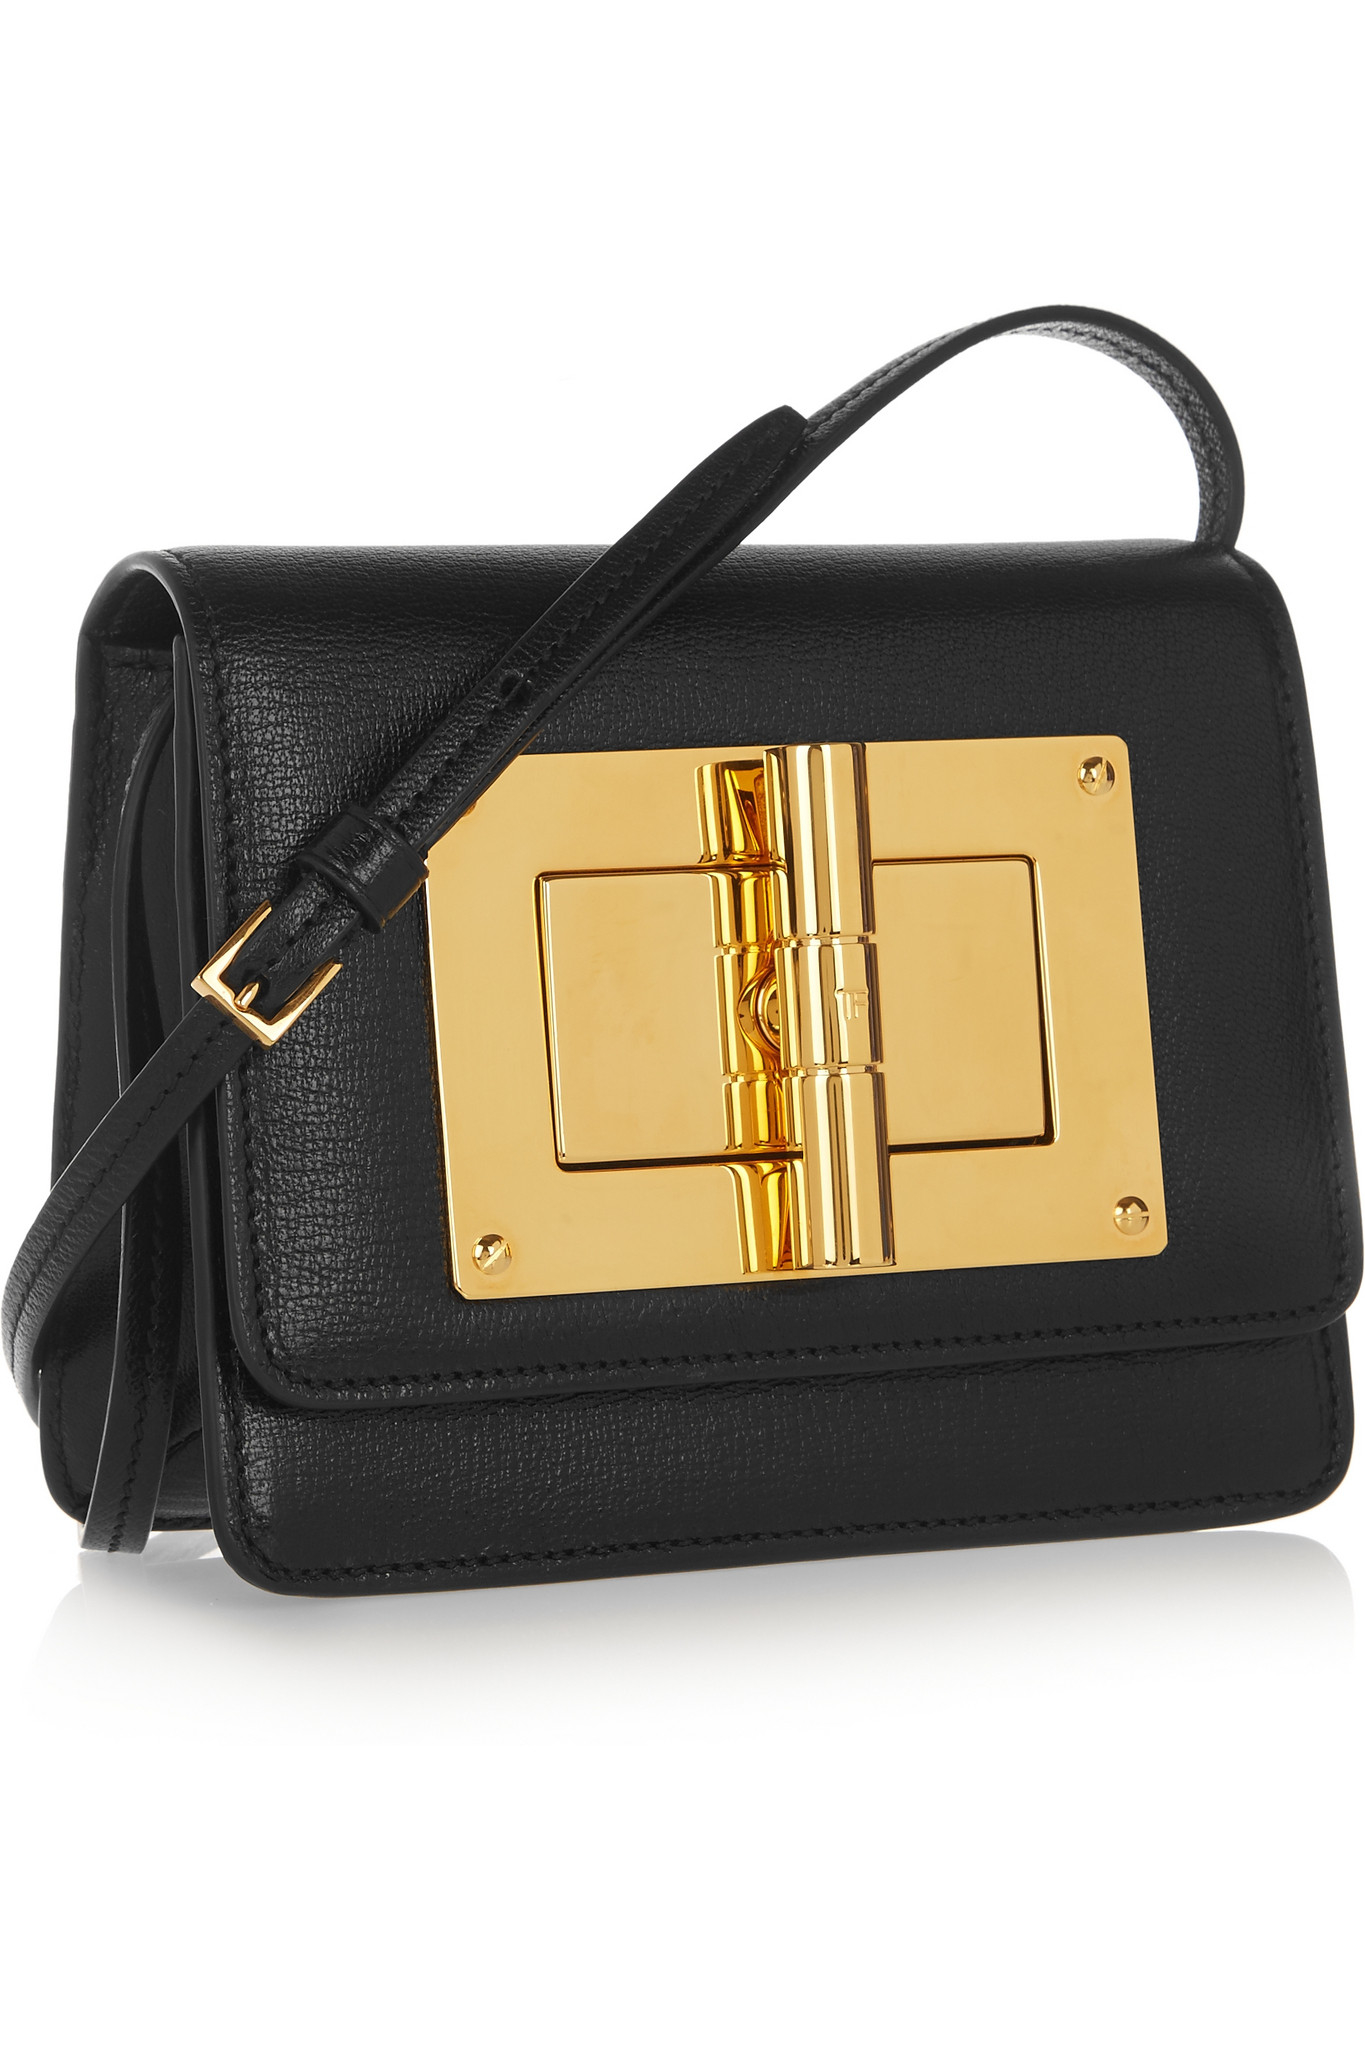 Lyst - Tom Ford Natalia Mini Textured-Leather Shoulder Bag in Black